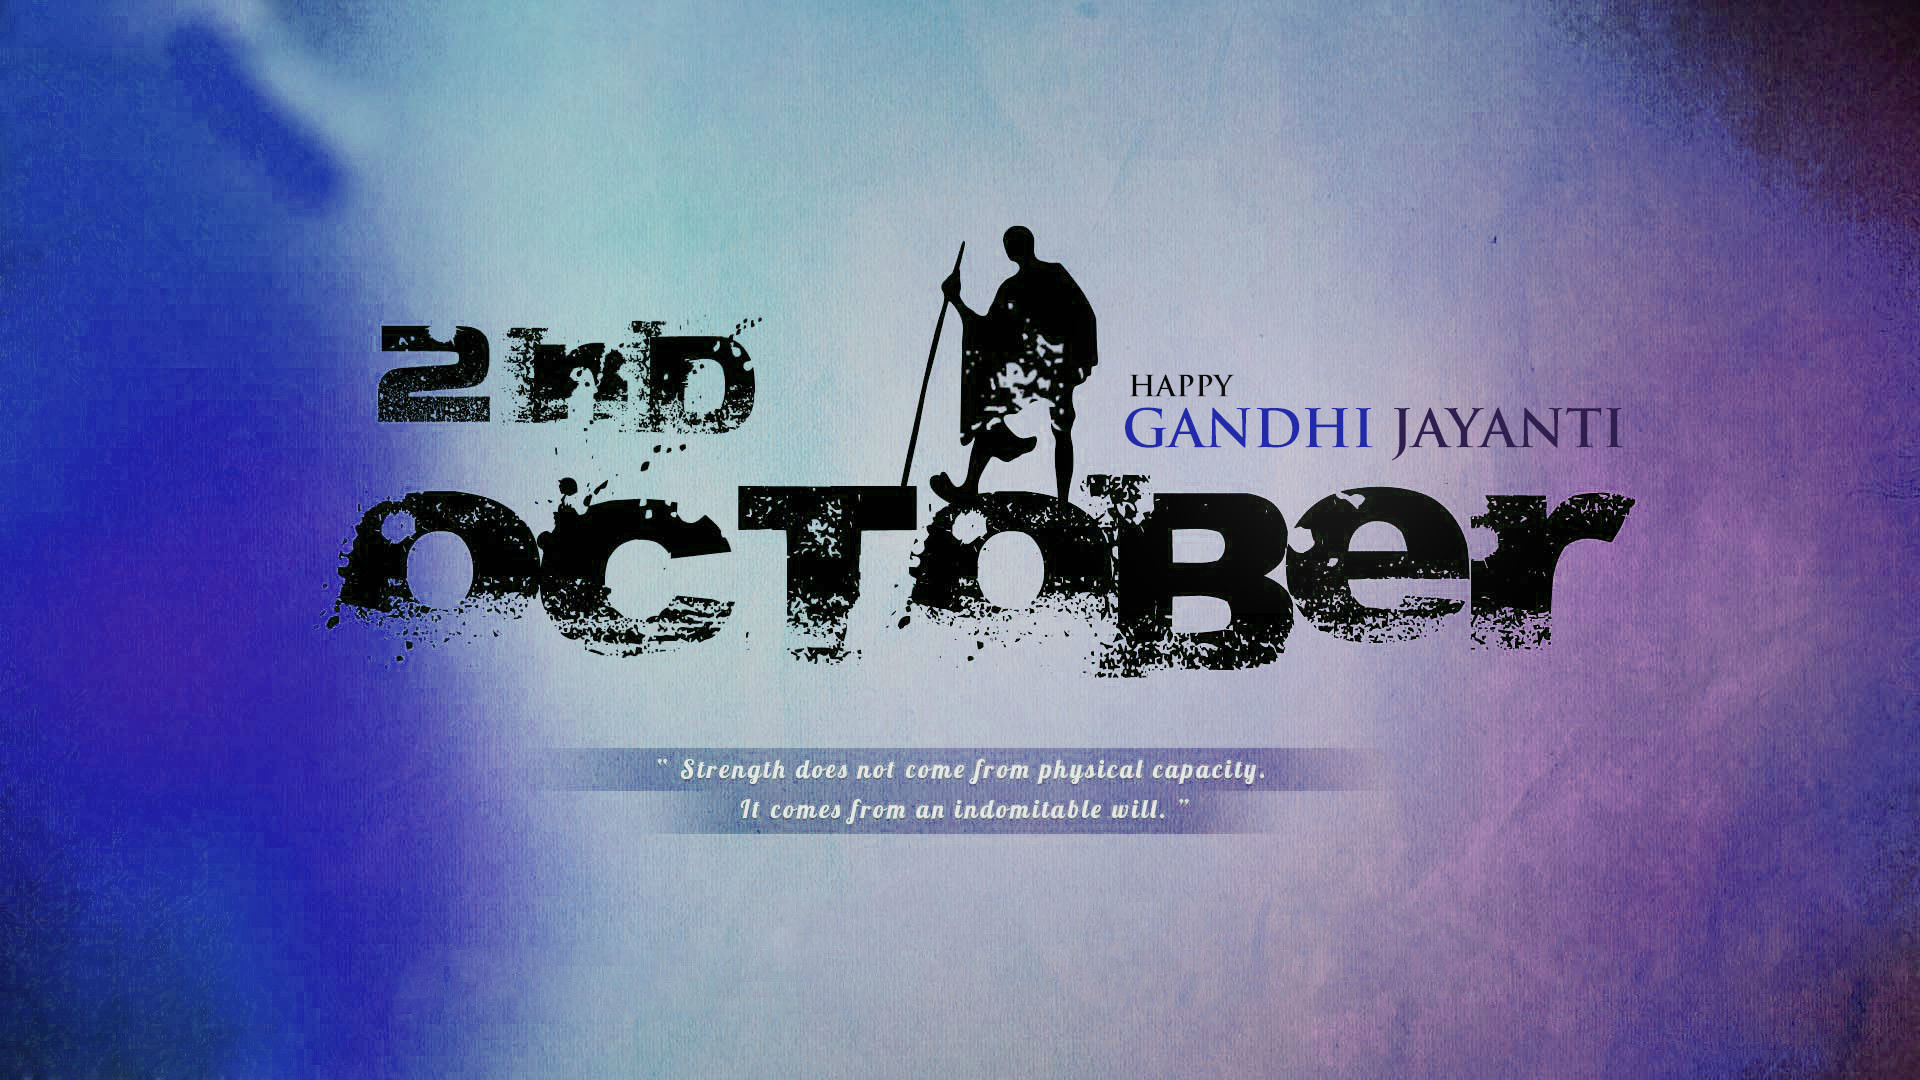 1920x1080 gandhi jayanti wishes october 2 new hd wallpaper